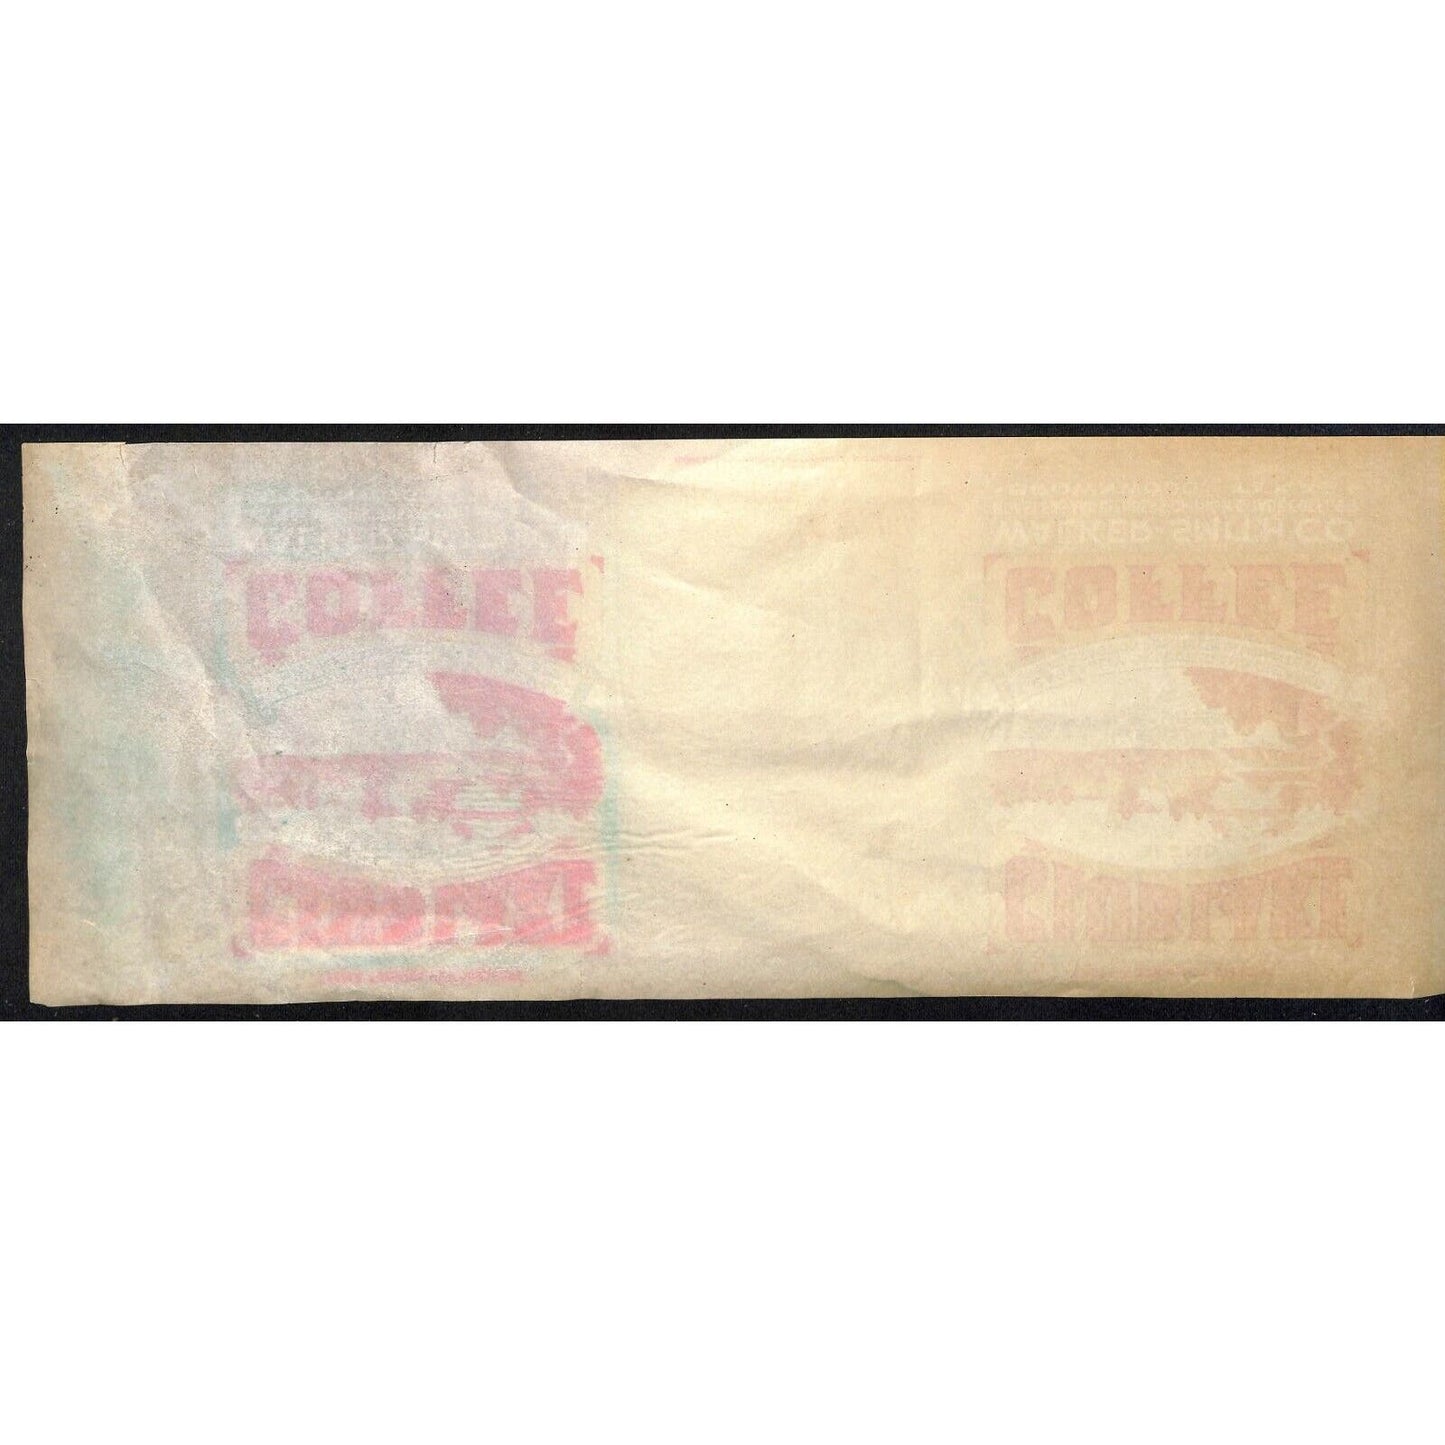 Scarce Club Lake Coffee Walker-Smith Brownwood, TX Paper Label c1930